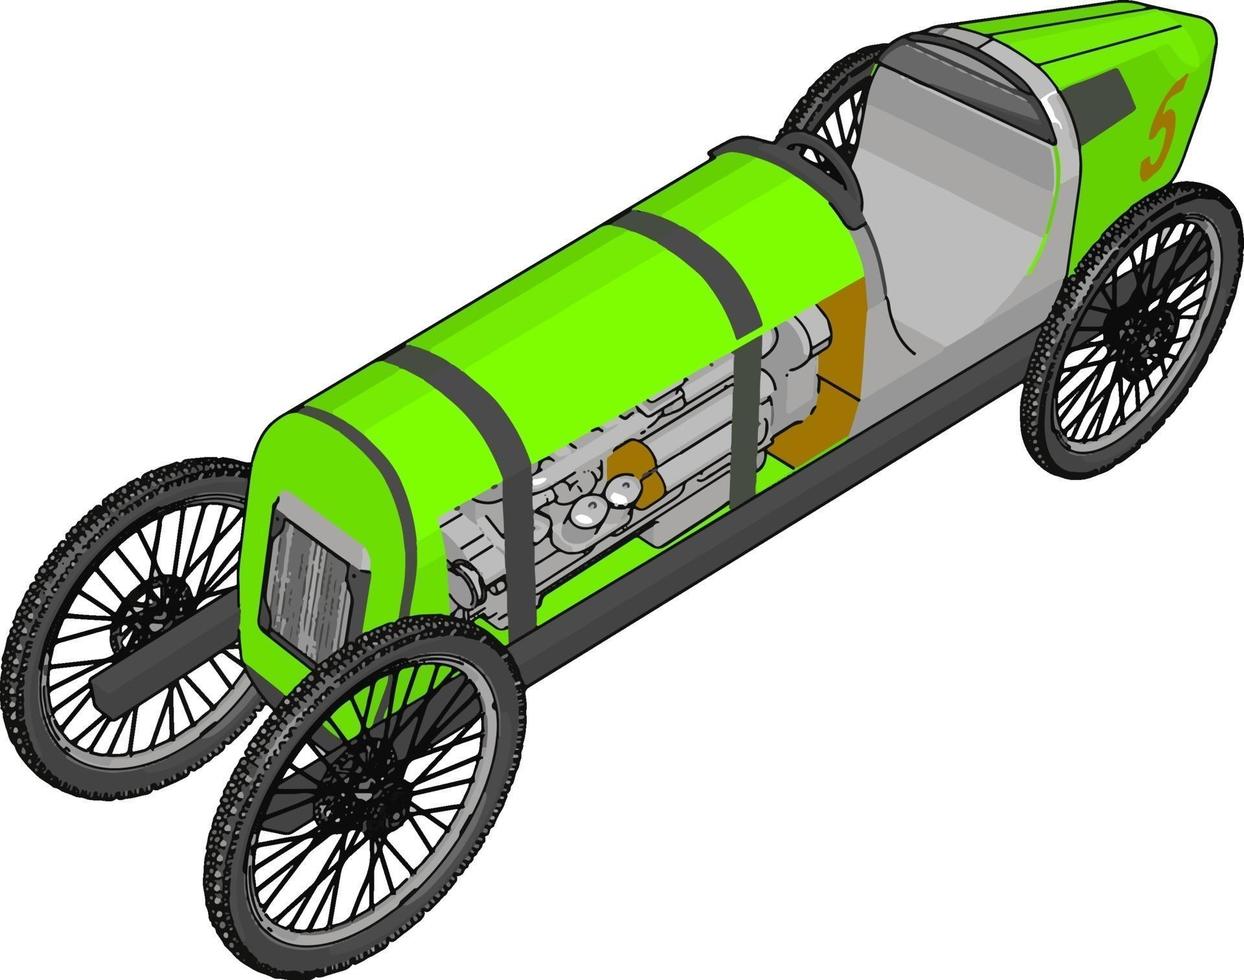 Green antique car, illustration, vector on white background.